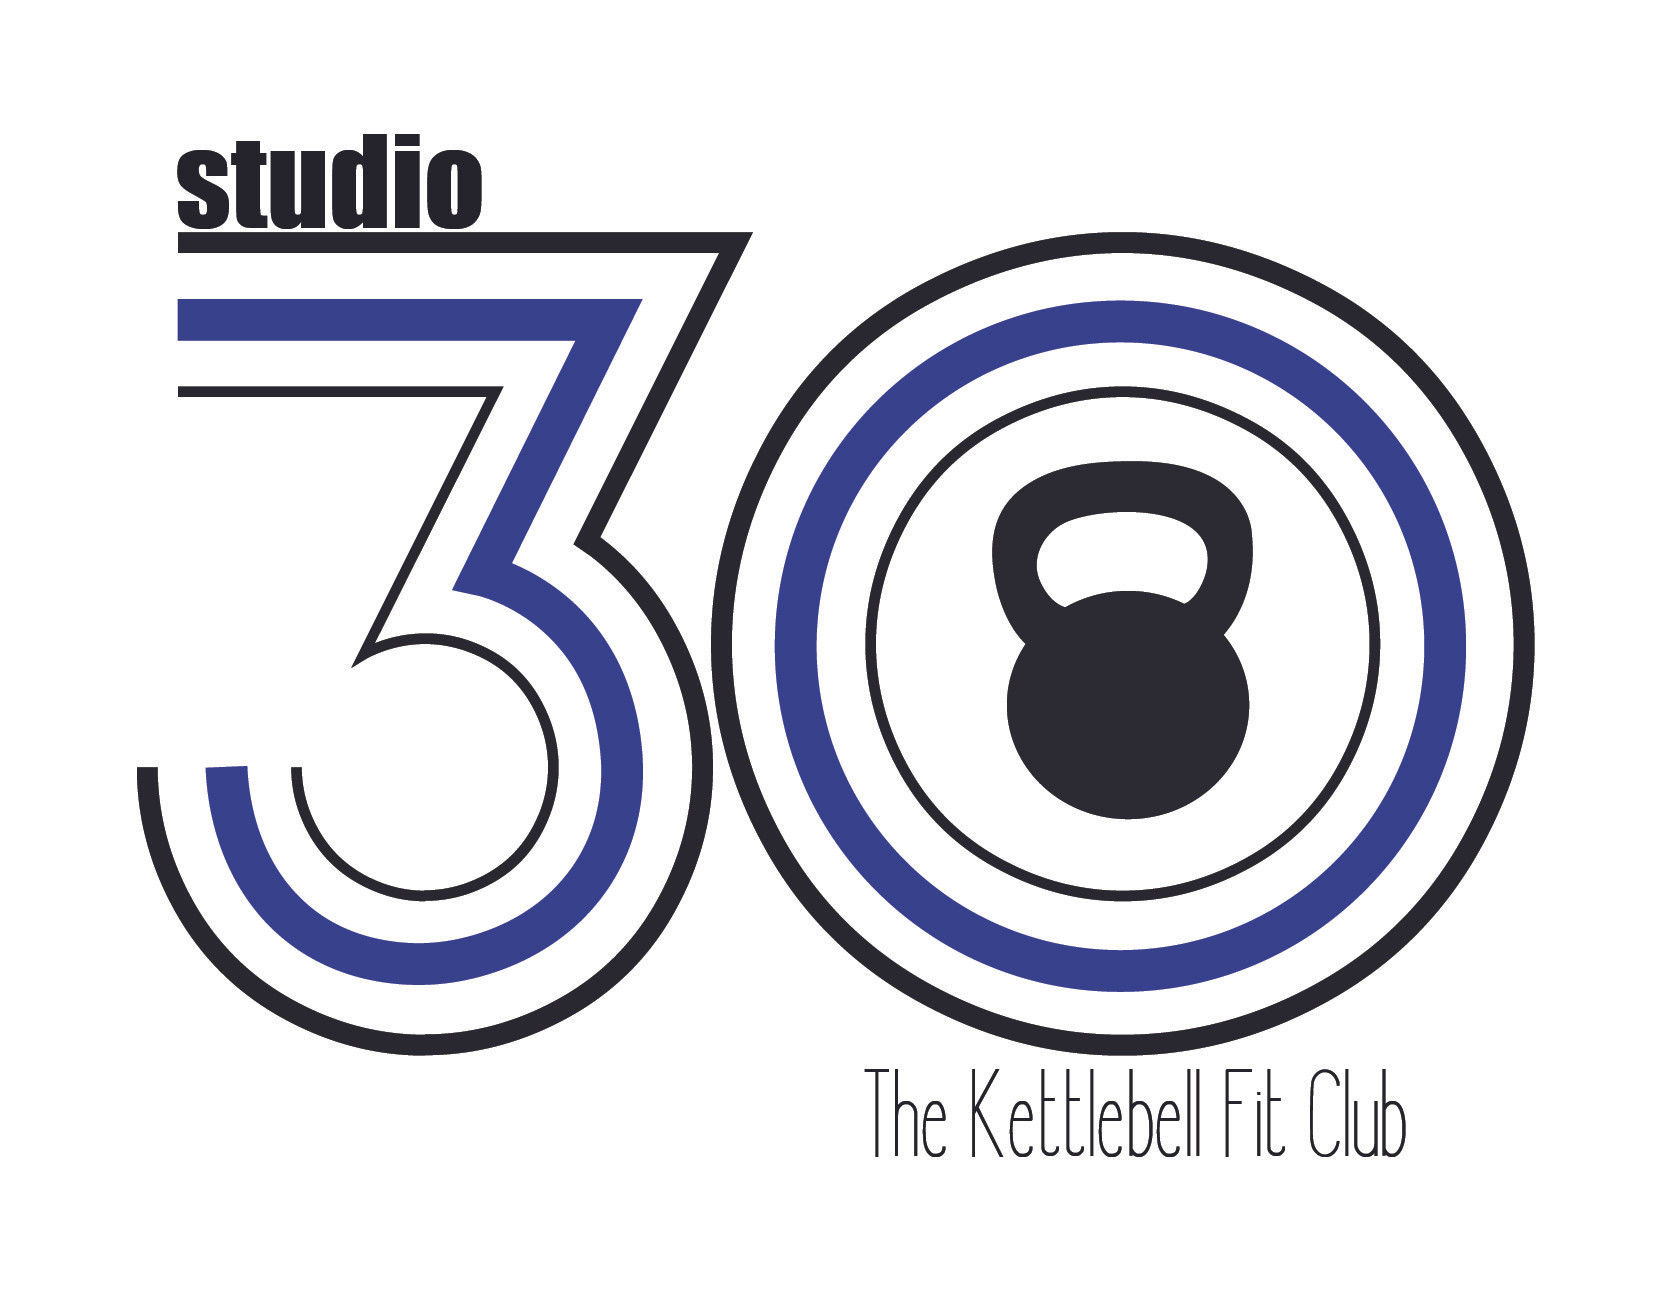 Studio 30 – The Kettlebell Fit Club Logo